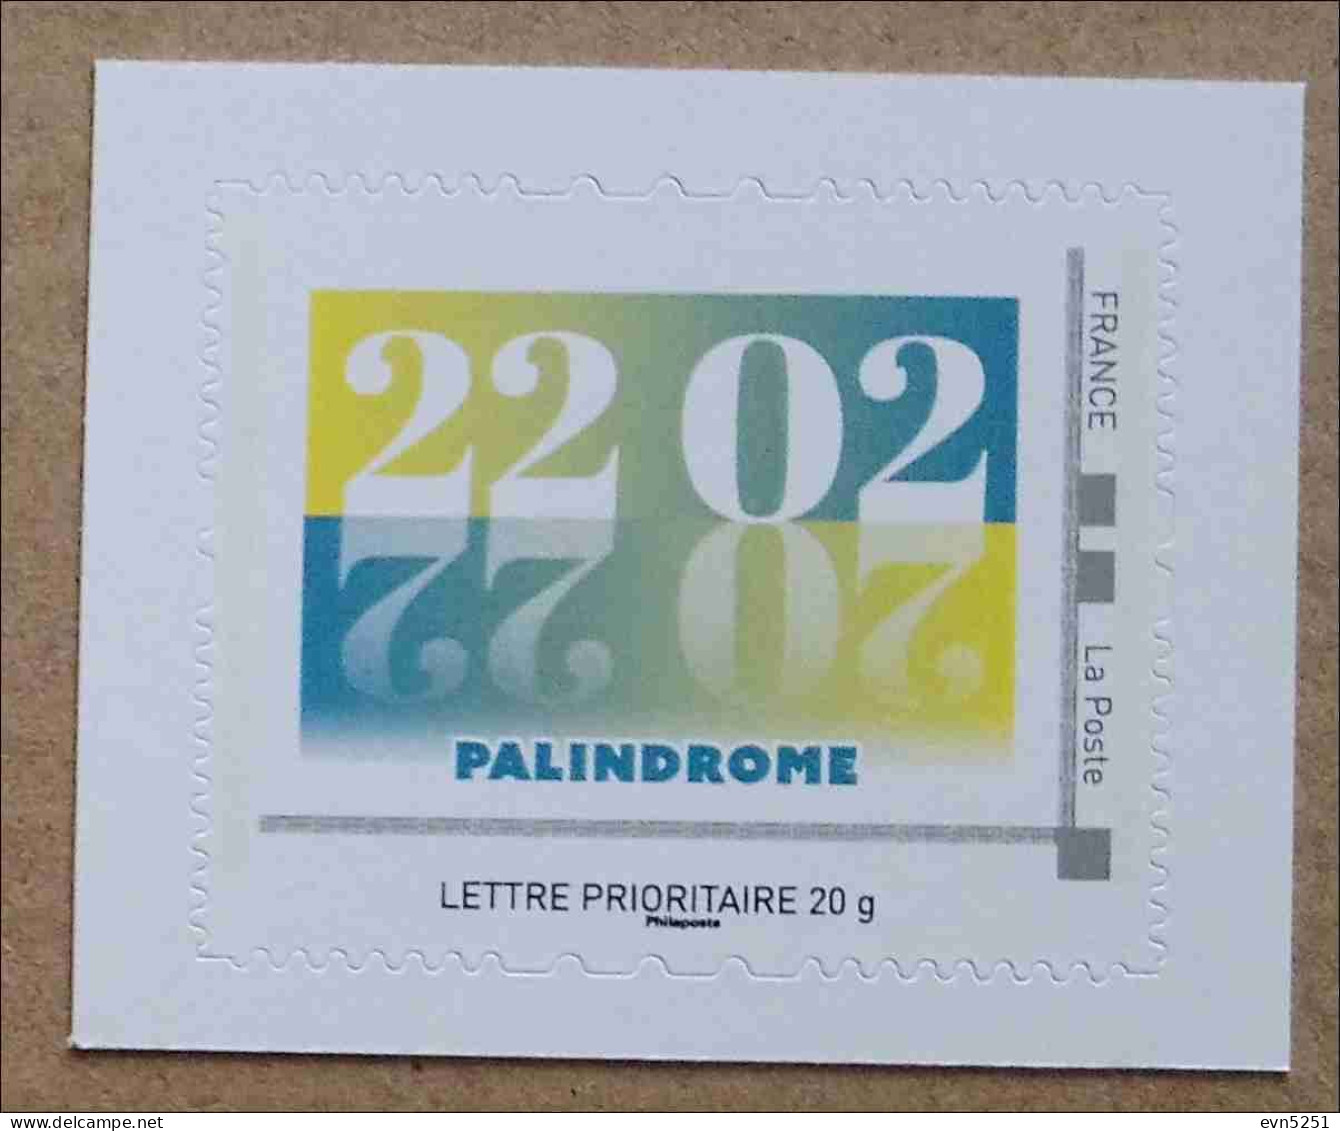 A4-88 : Palindrome - 22 02 2022 (autoadhésif / Autocollant) - Neufs